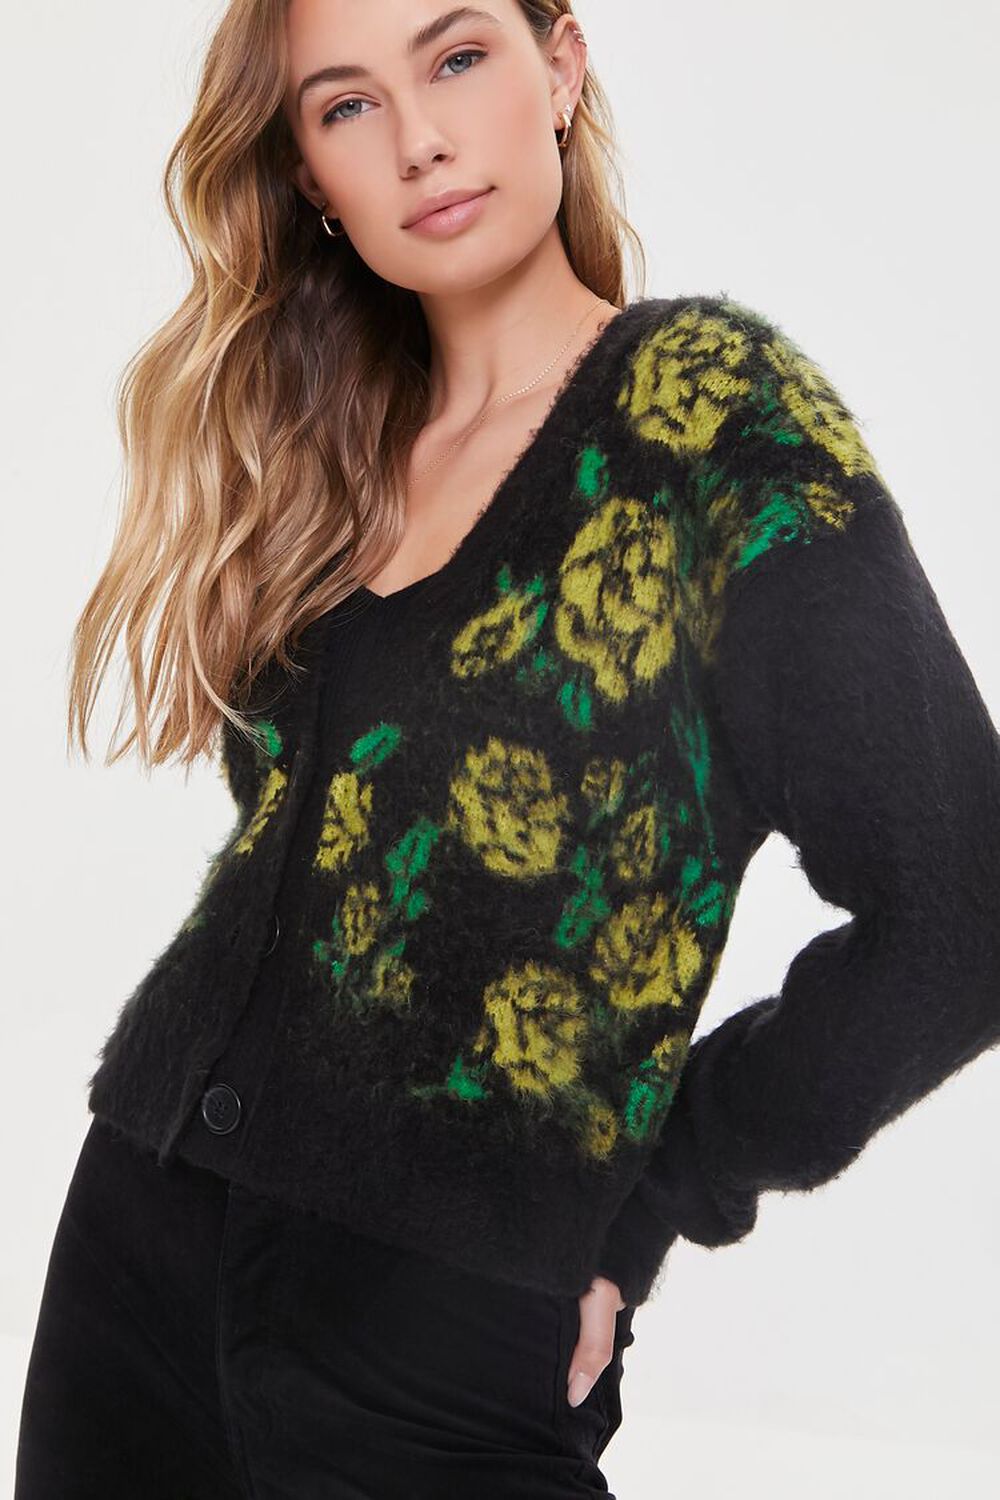 BLACK/MULTI Fuzzy Knit Rose Print Cardigan Sweater, image 1